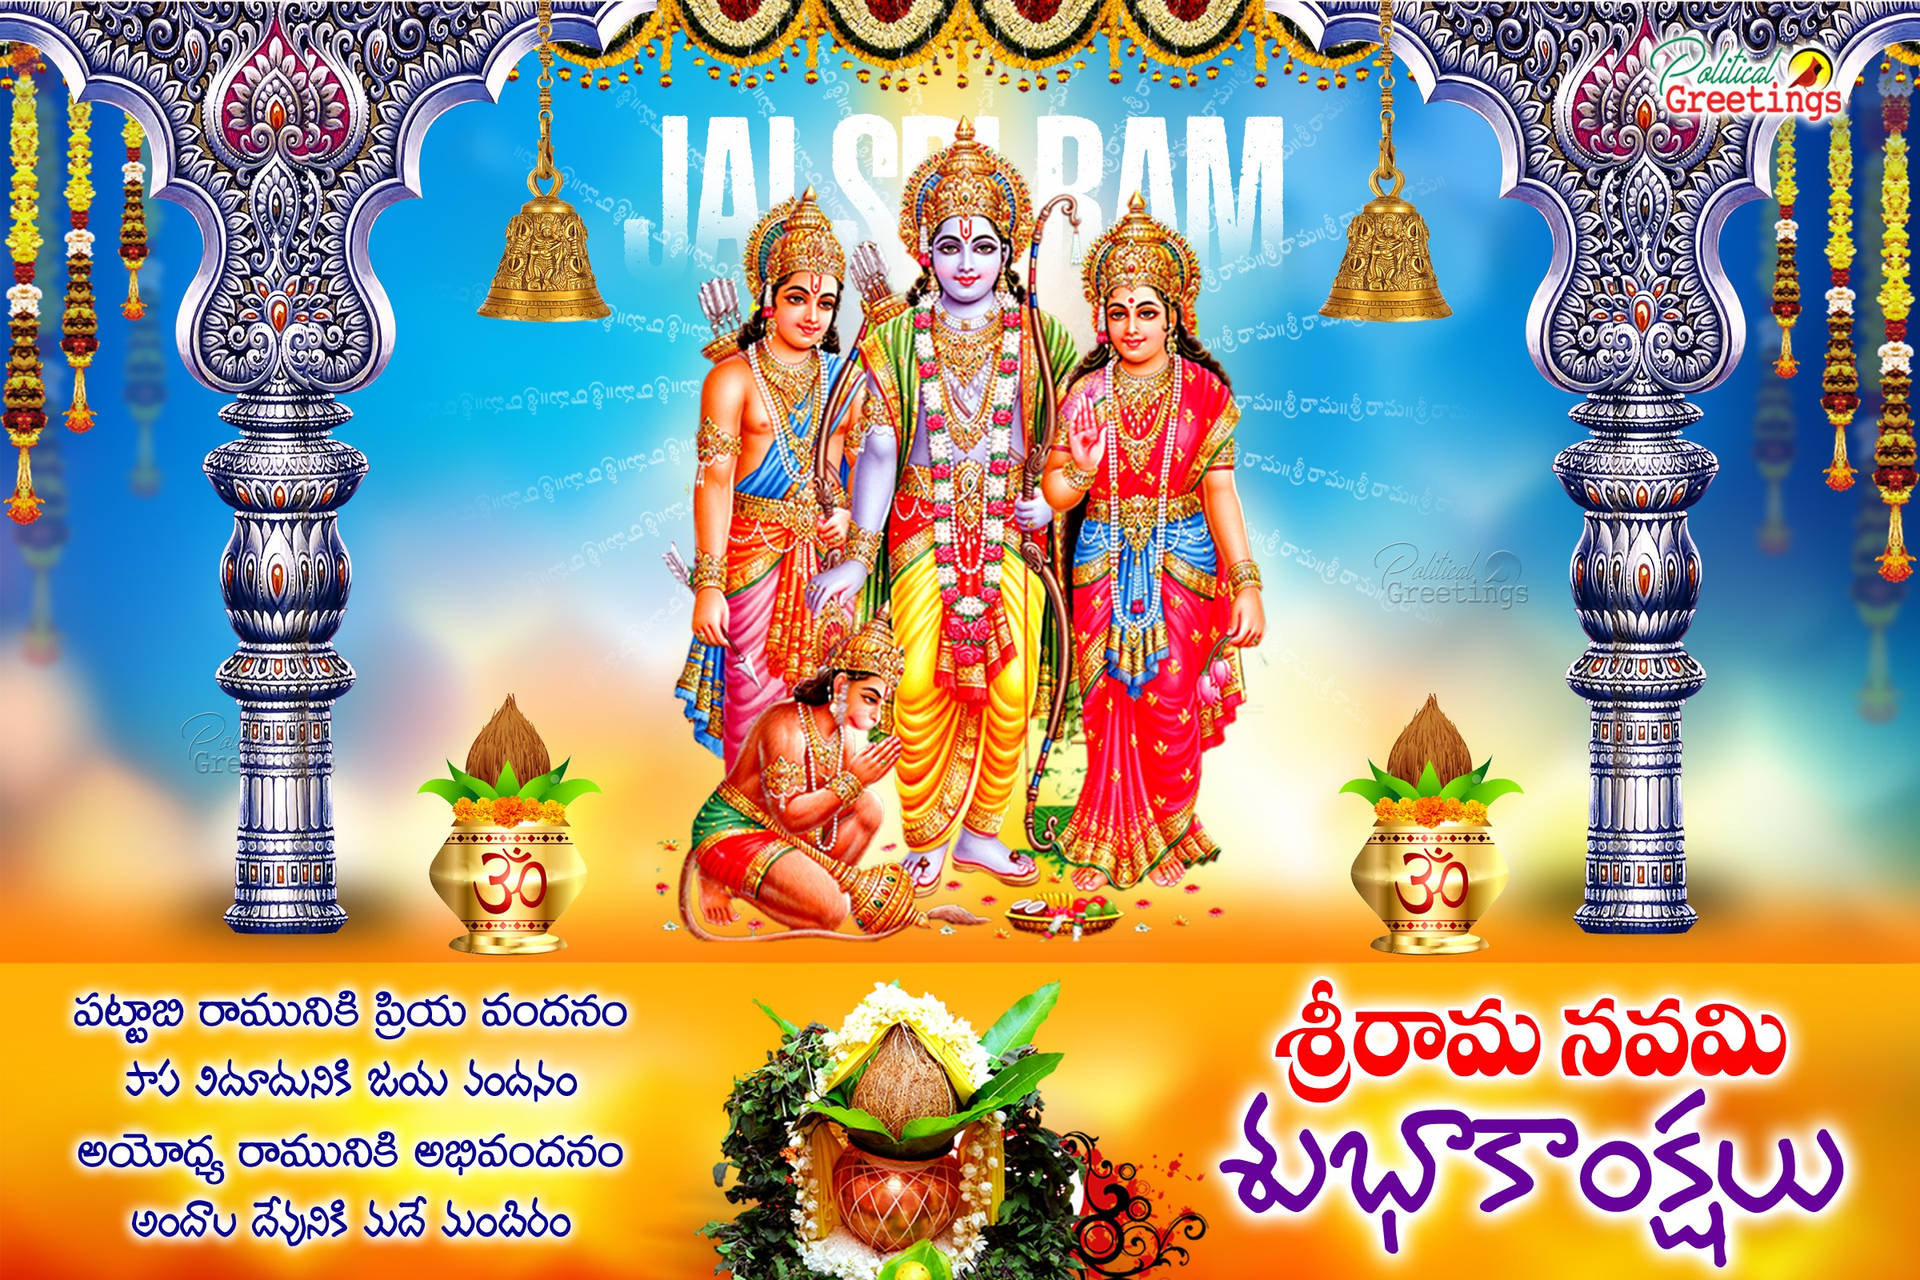 Jai Shri Ram Ramayana Characters Under Silver Arch